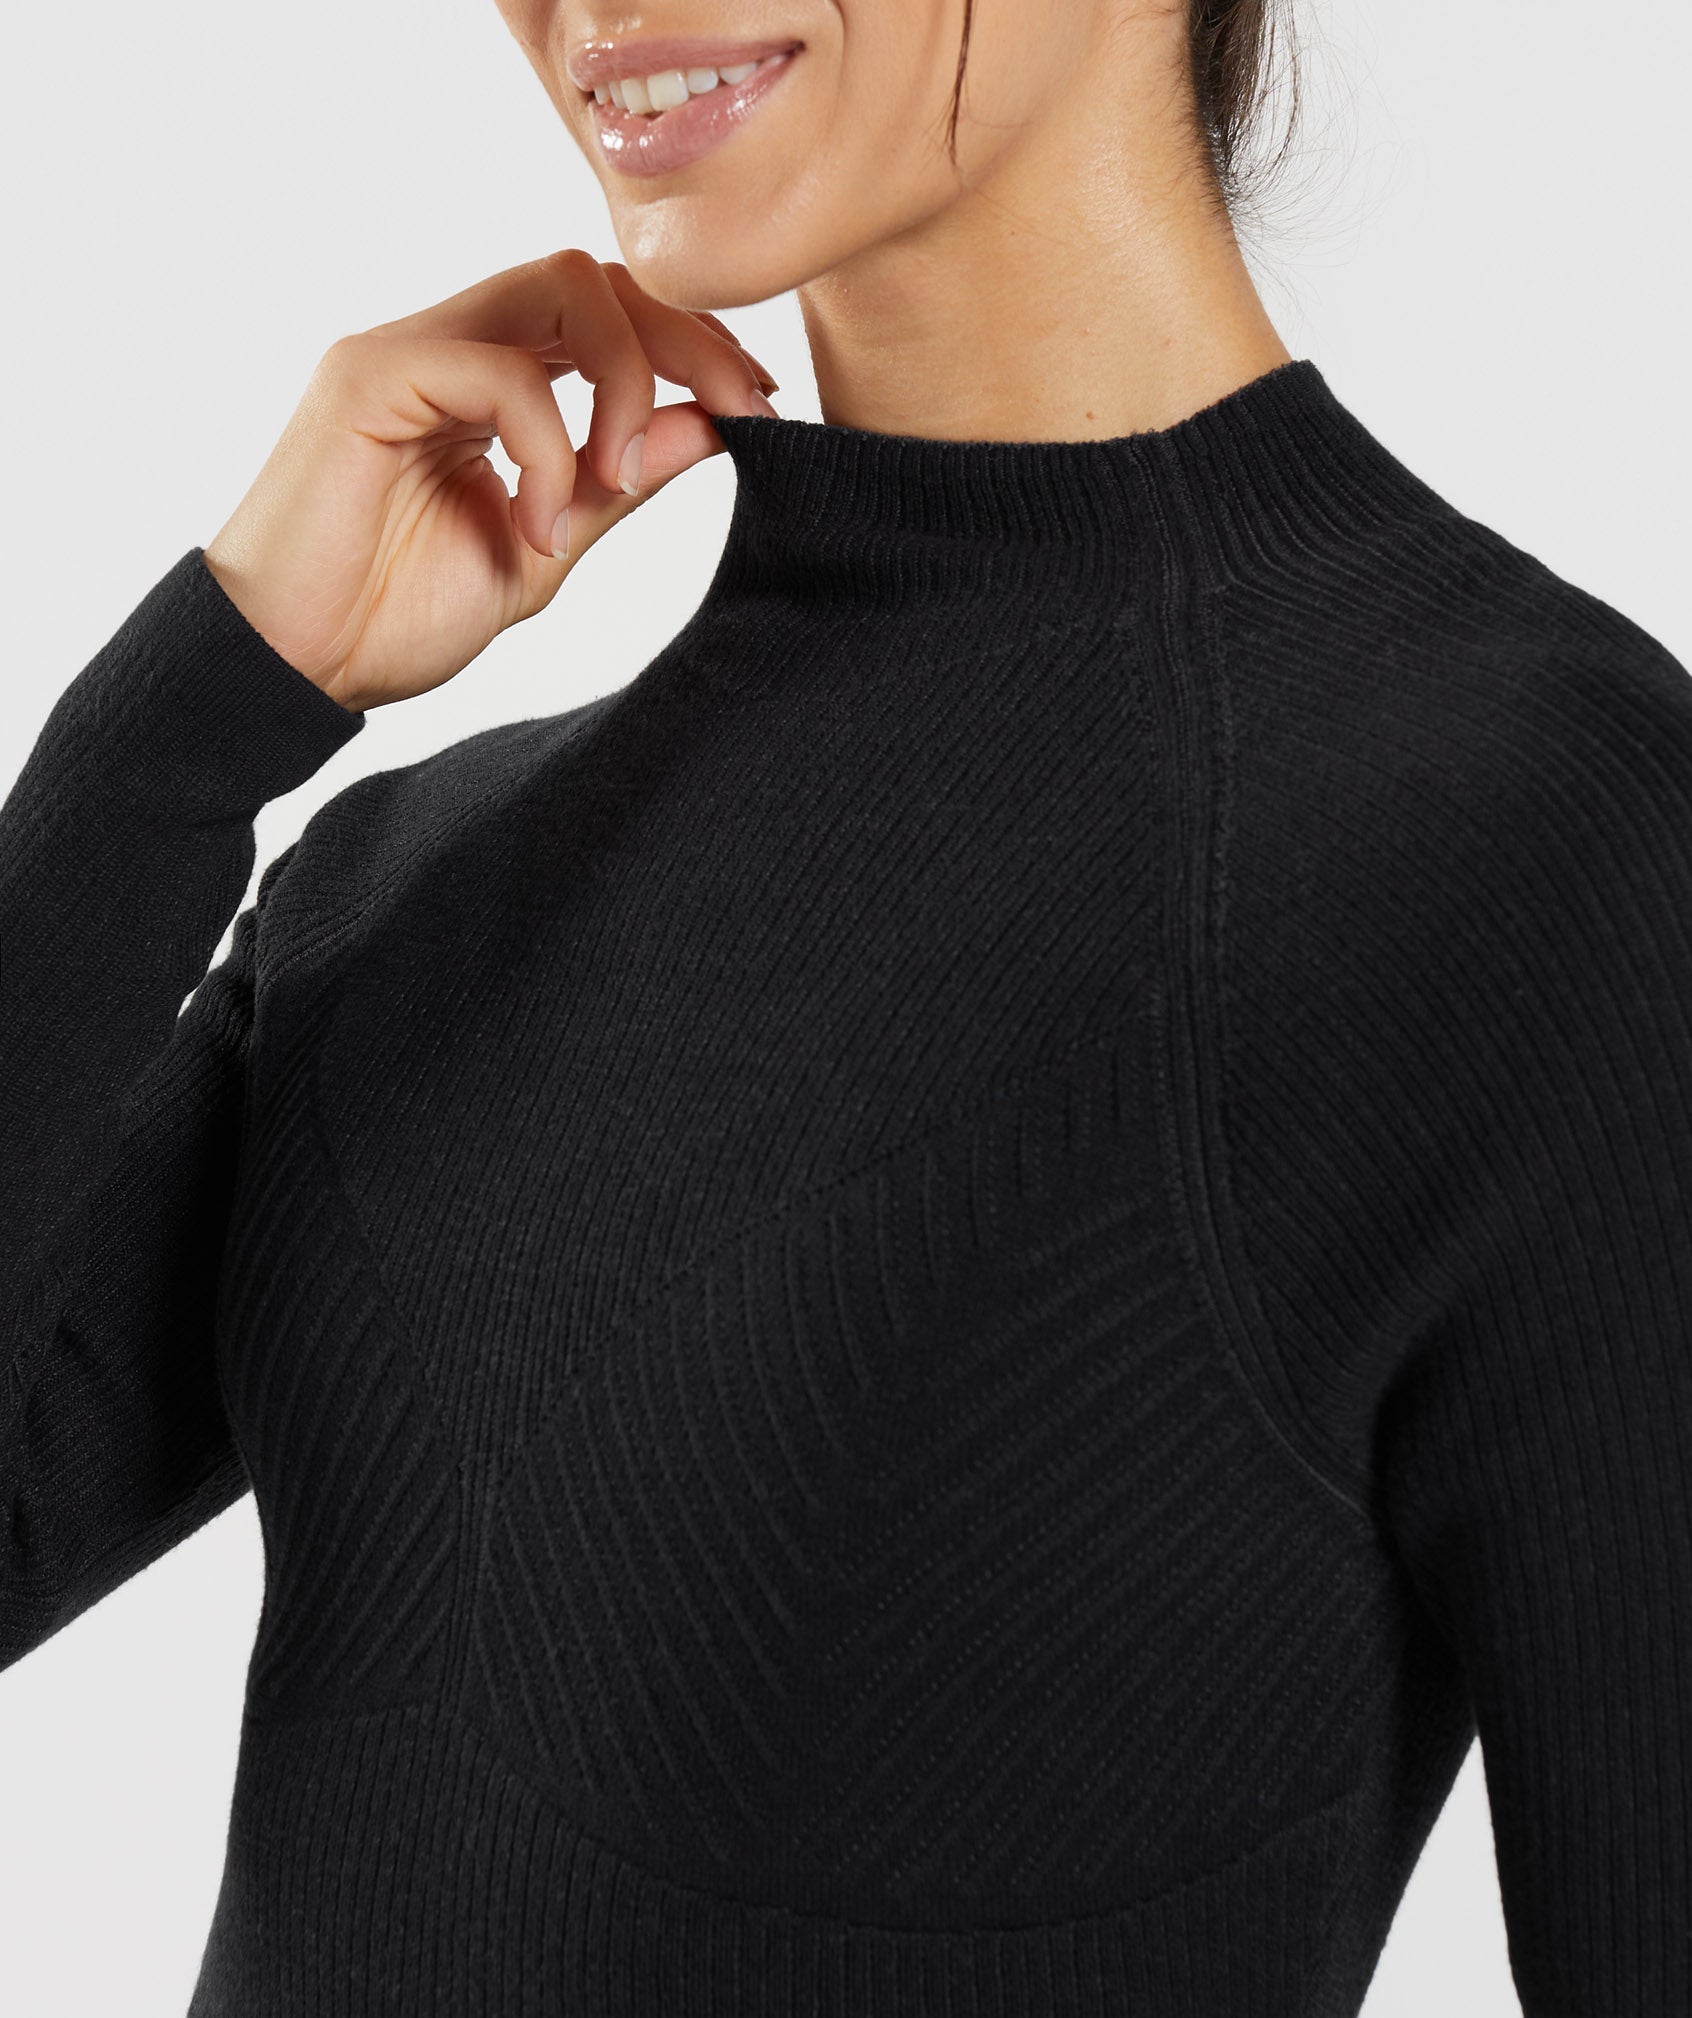 Gymshark Pause Knitwear Long Sleeve Top - Black/Onyx Grey